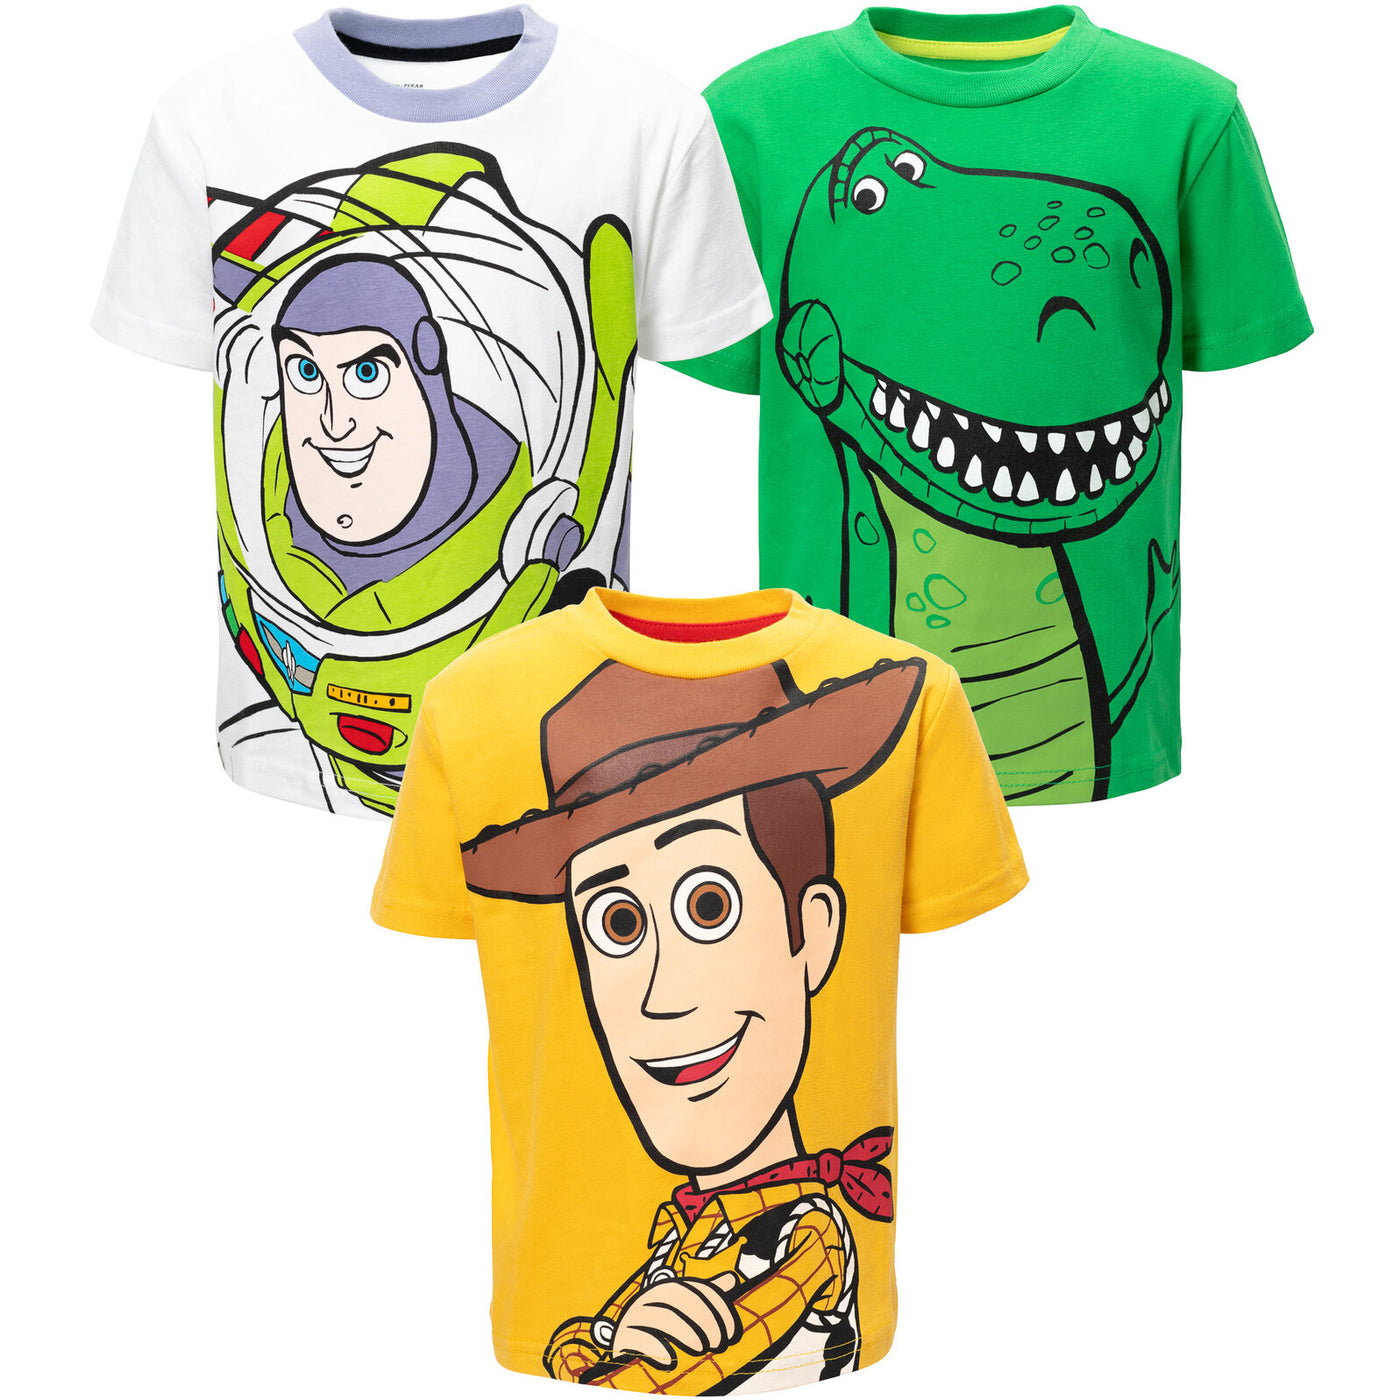 Disney Pixar 3 Pack Graphic T-Shirts